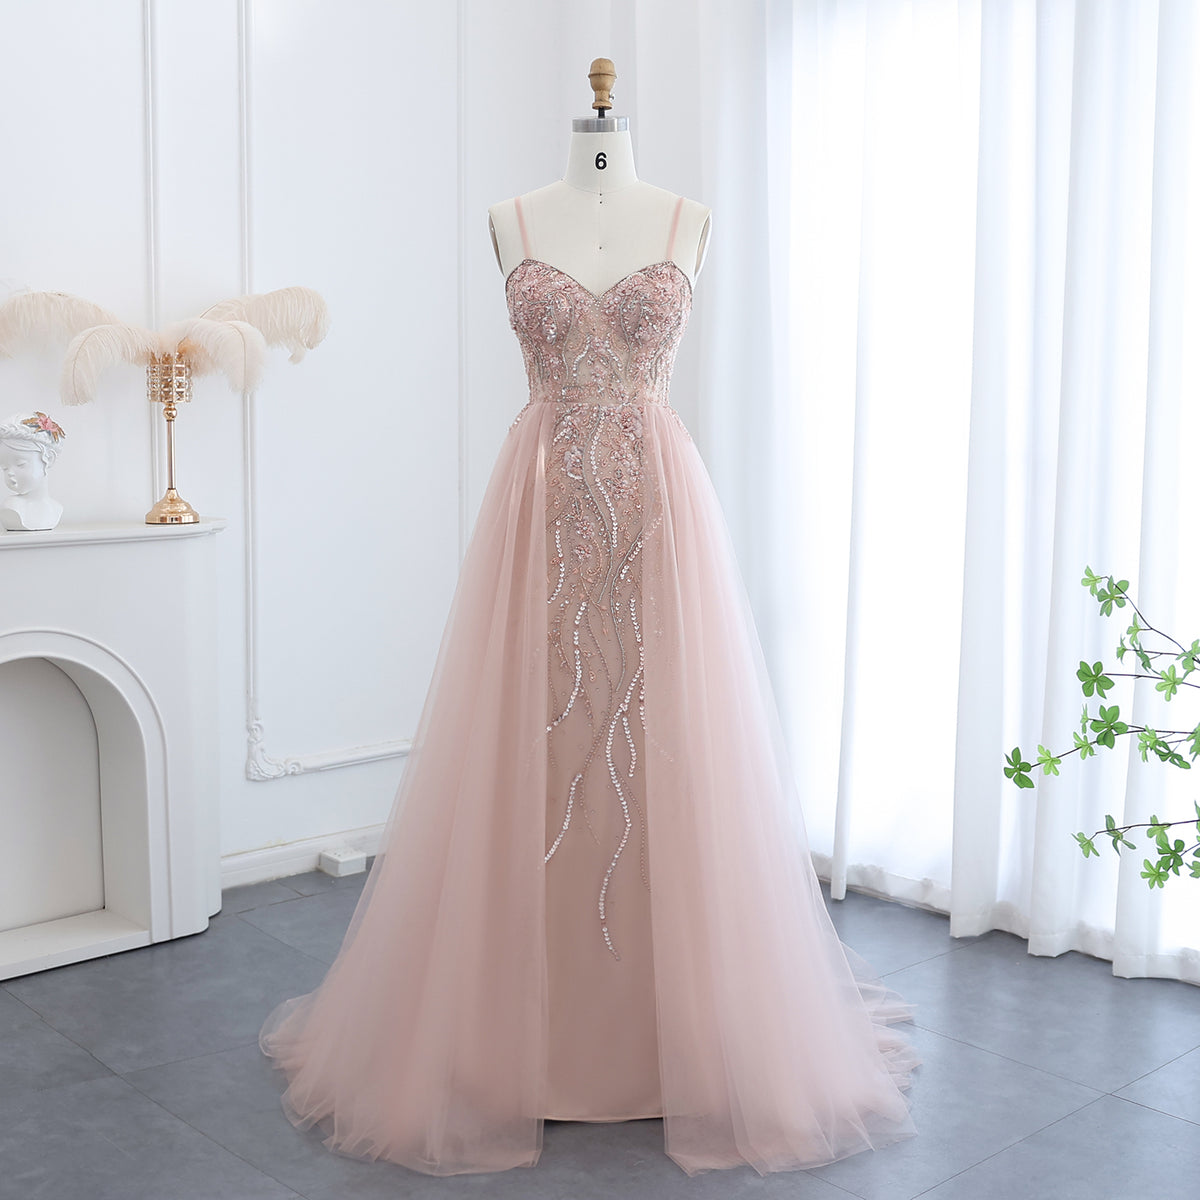 Sharon Said Blush Pink Dubai Evening Dresses with Overskirt Spaghetti Straps Sexy Long Luxury Wedding Party Prom Dress SS266